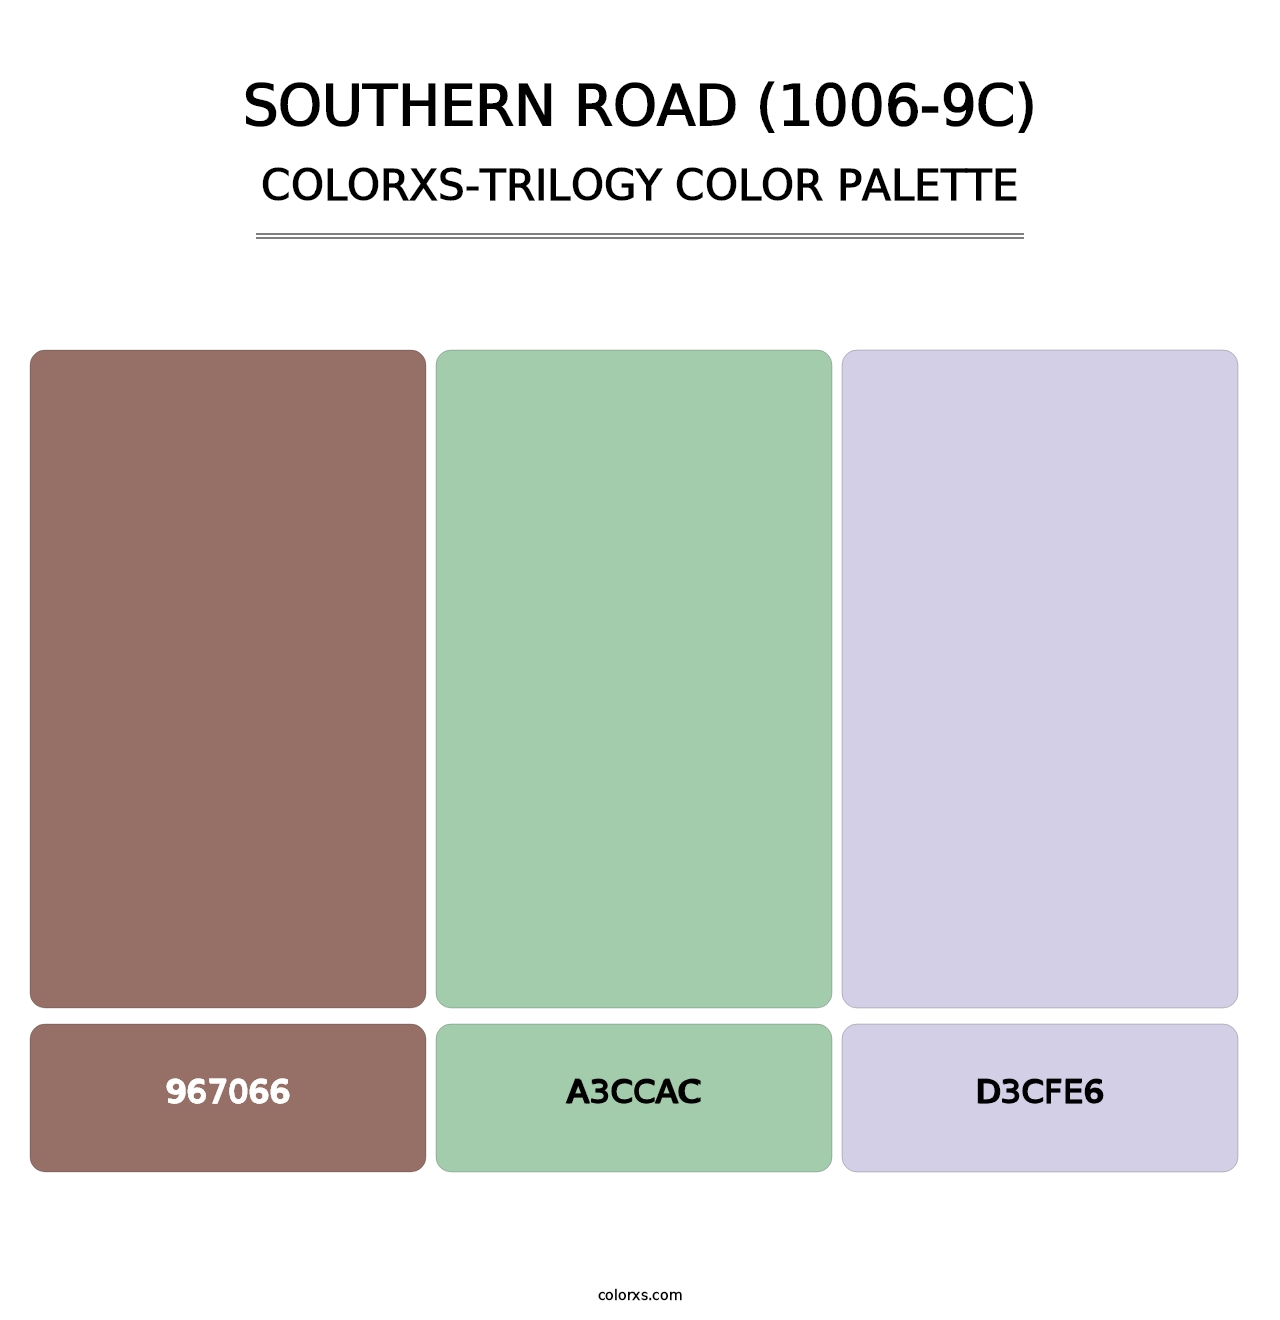 Southern Road (1006-9C) - Colorxs Trilogy Palette